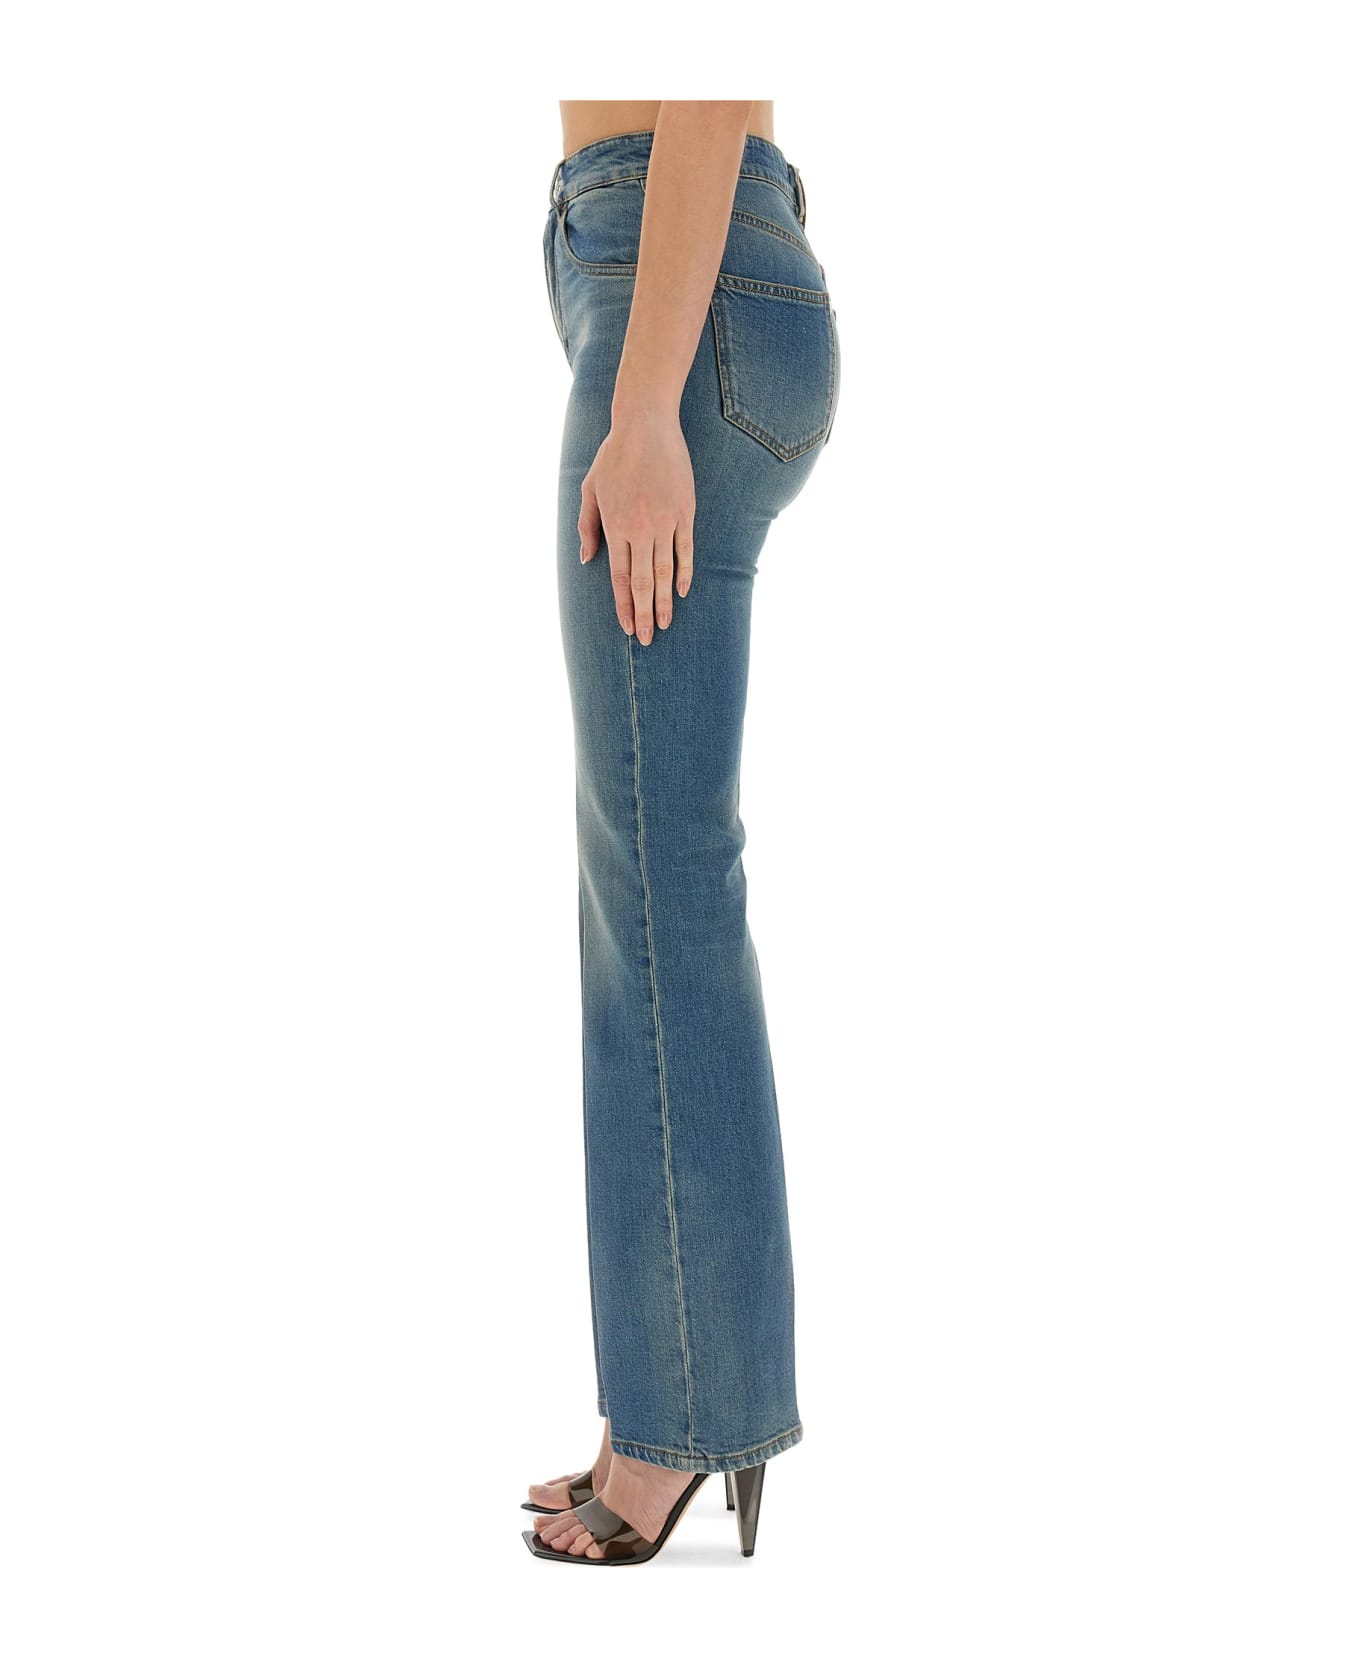 Victoria Beckham Jeans "julia" - BLU